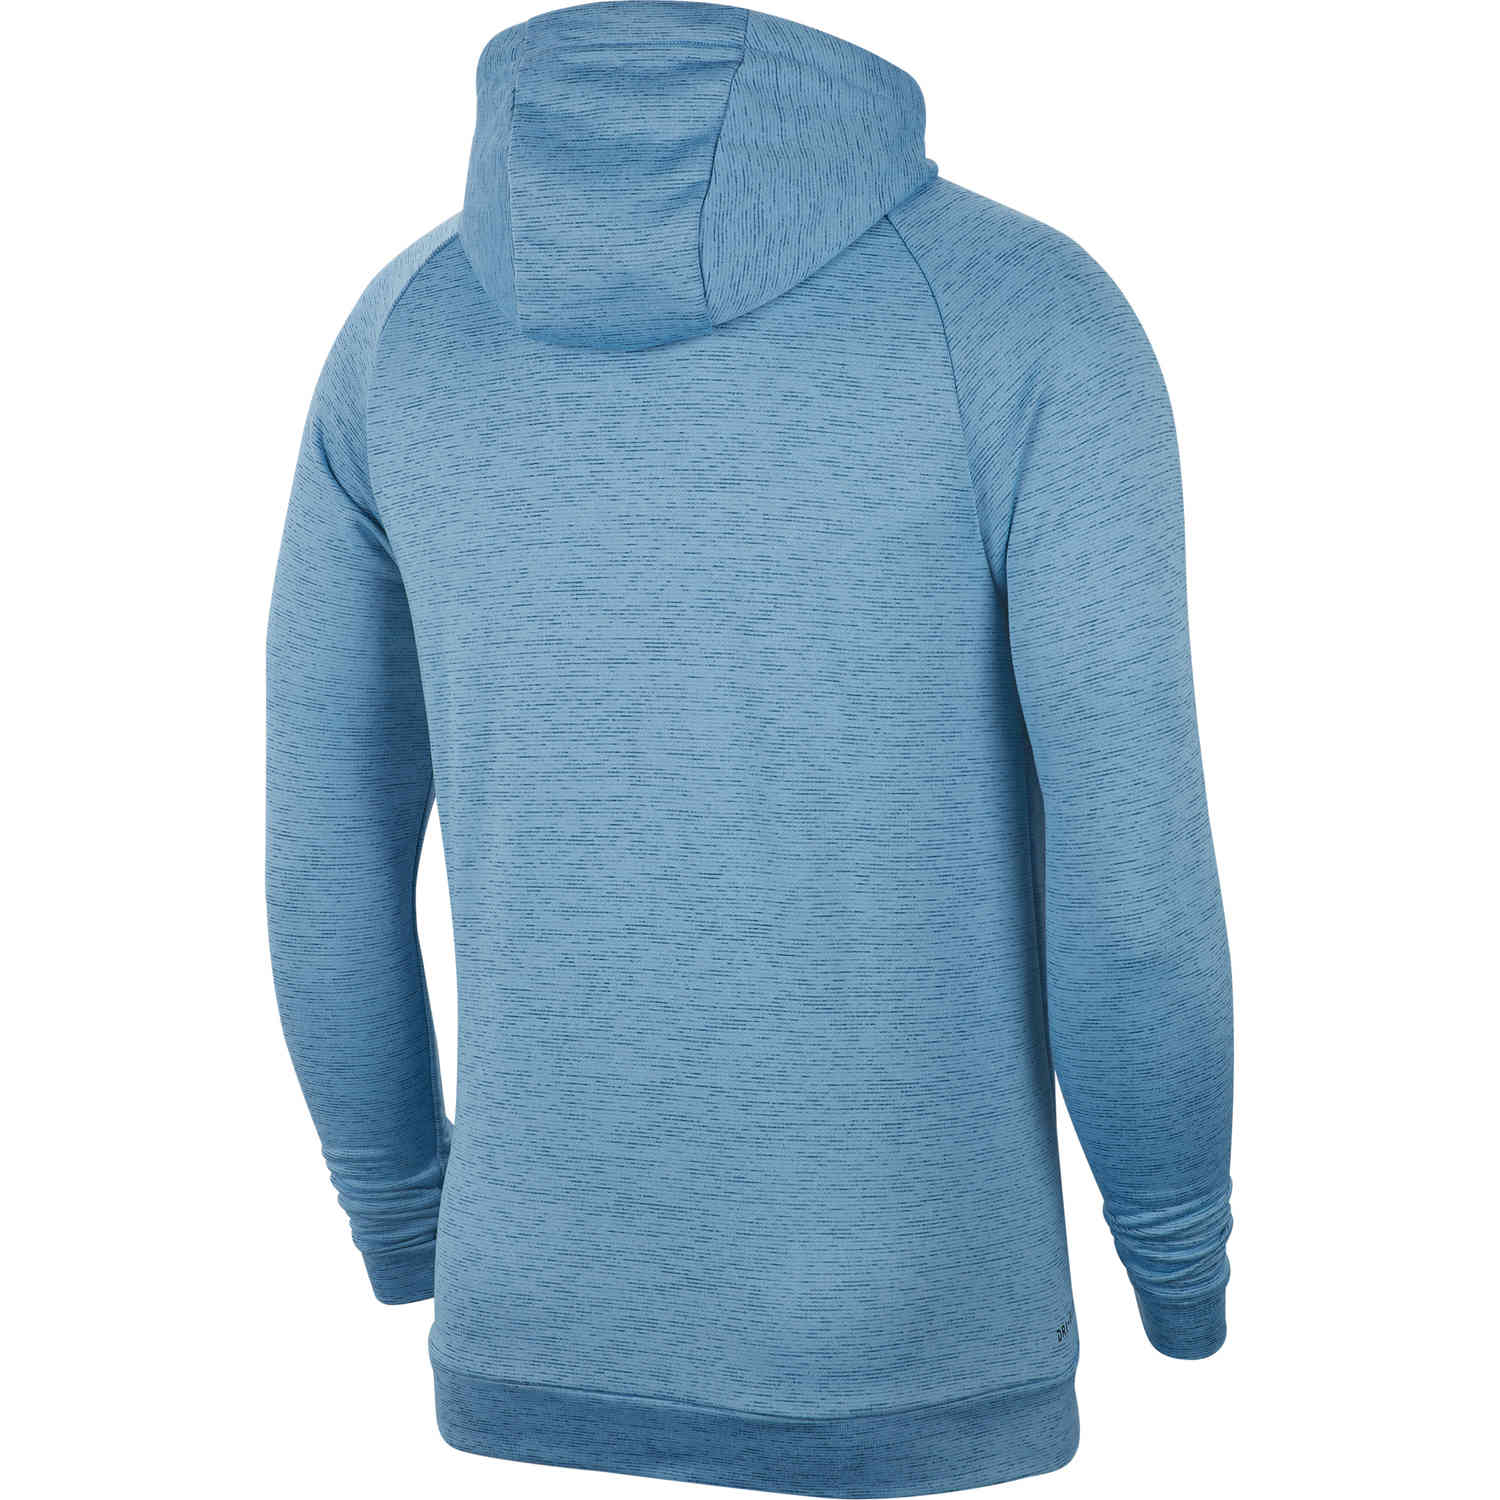 light blue nike sweatshirt